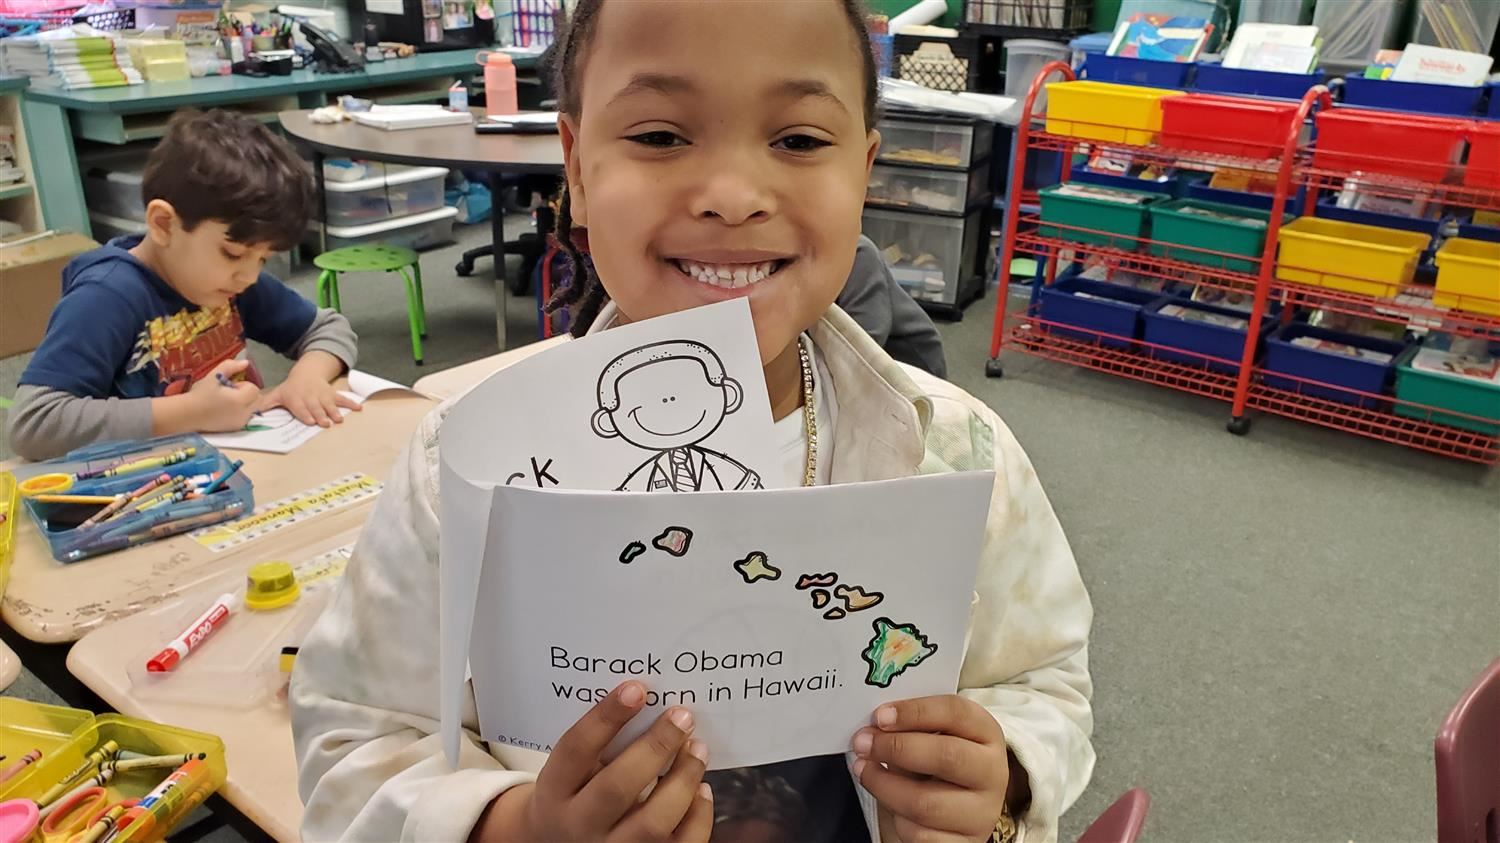 Student showing a reader about Barack Obama.